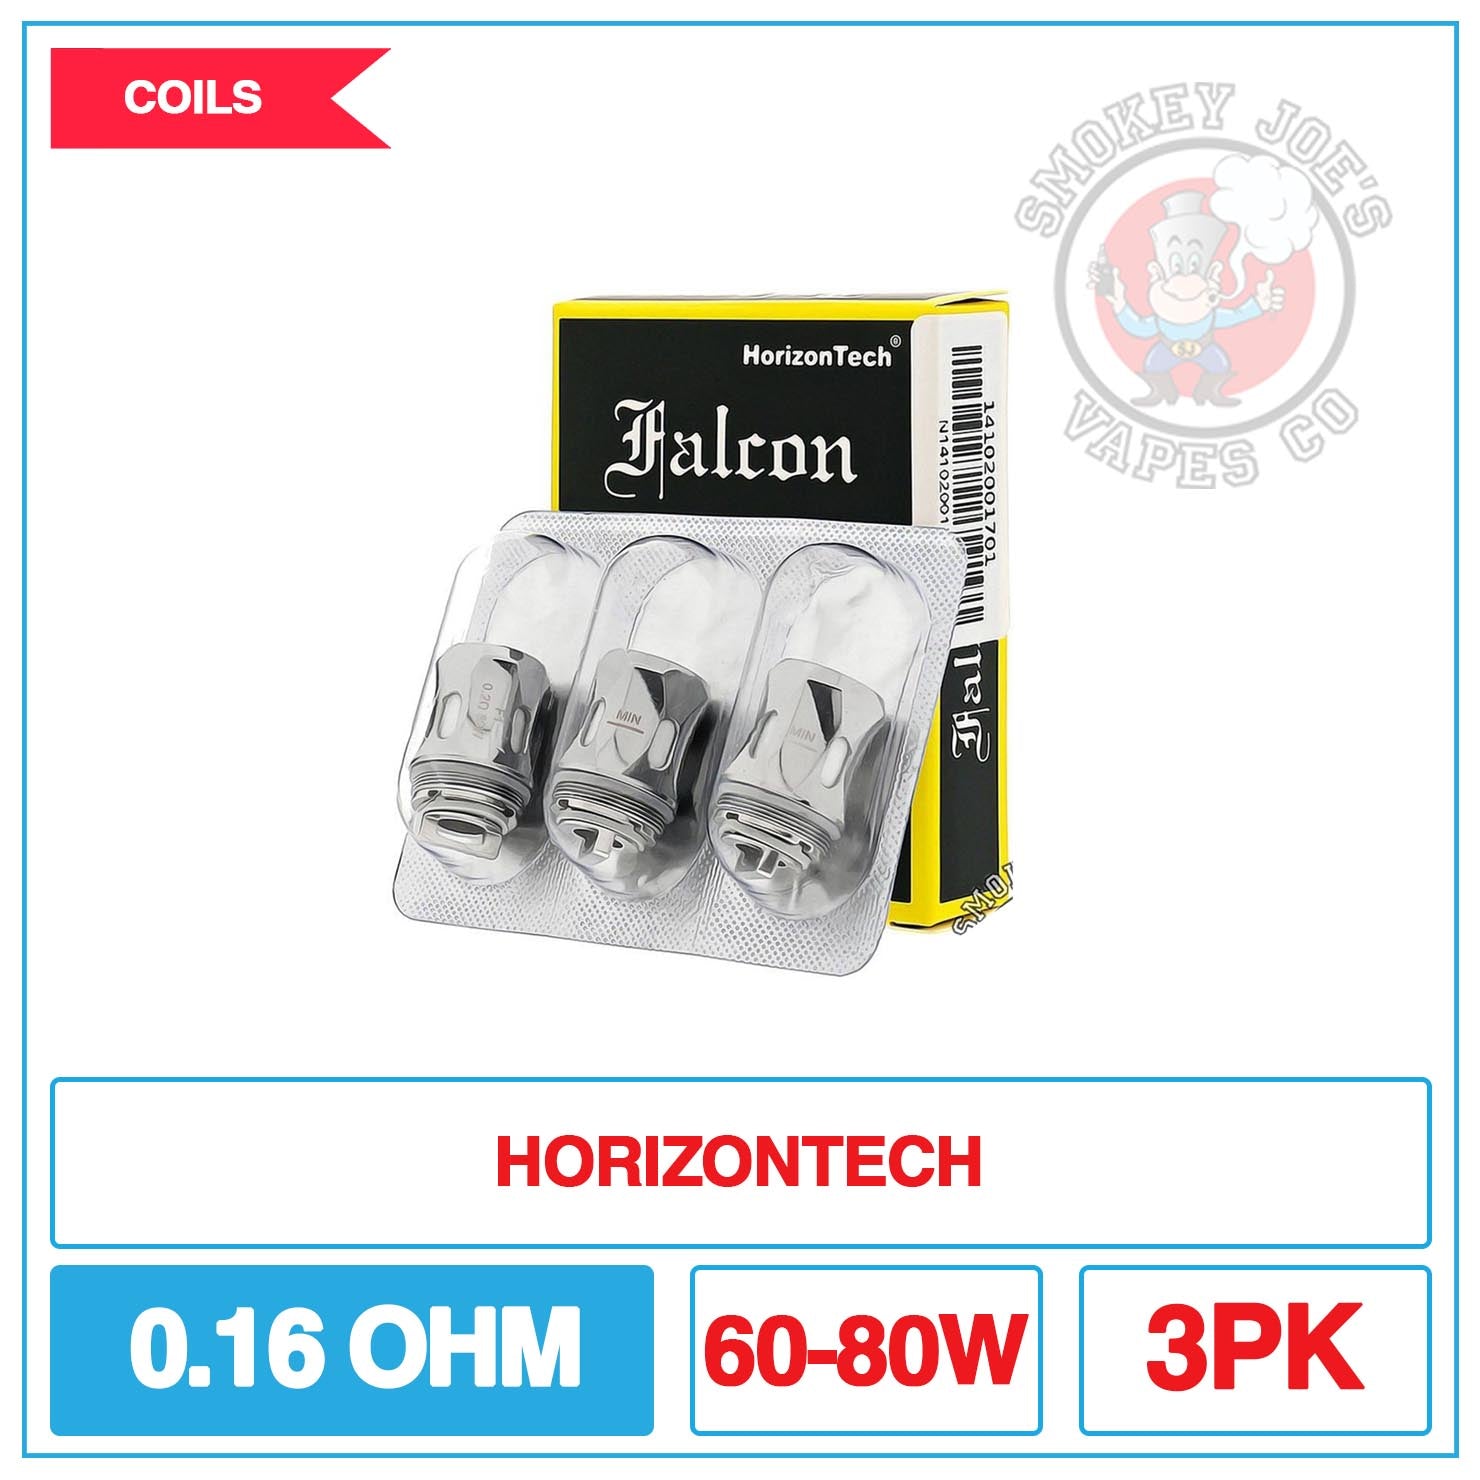 HorizonTech - Falcon / Falcon King - Replacement Coils |  Smokey Joes Vapes Co.